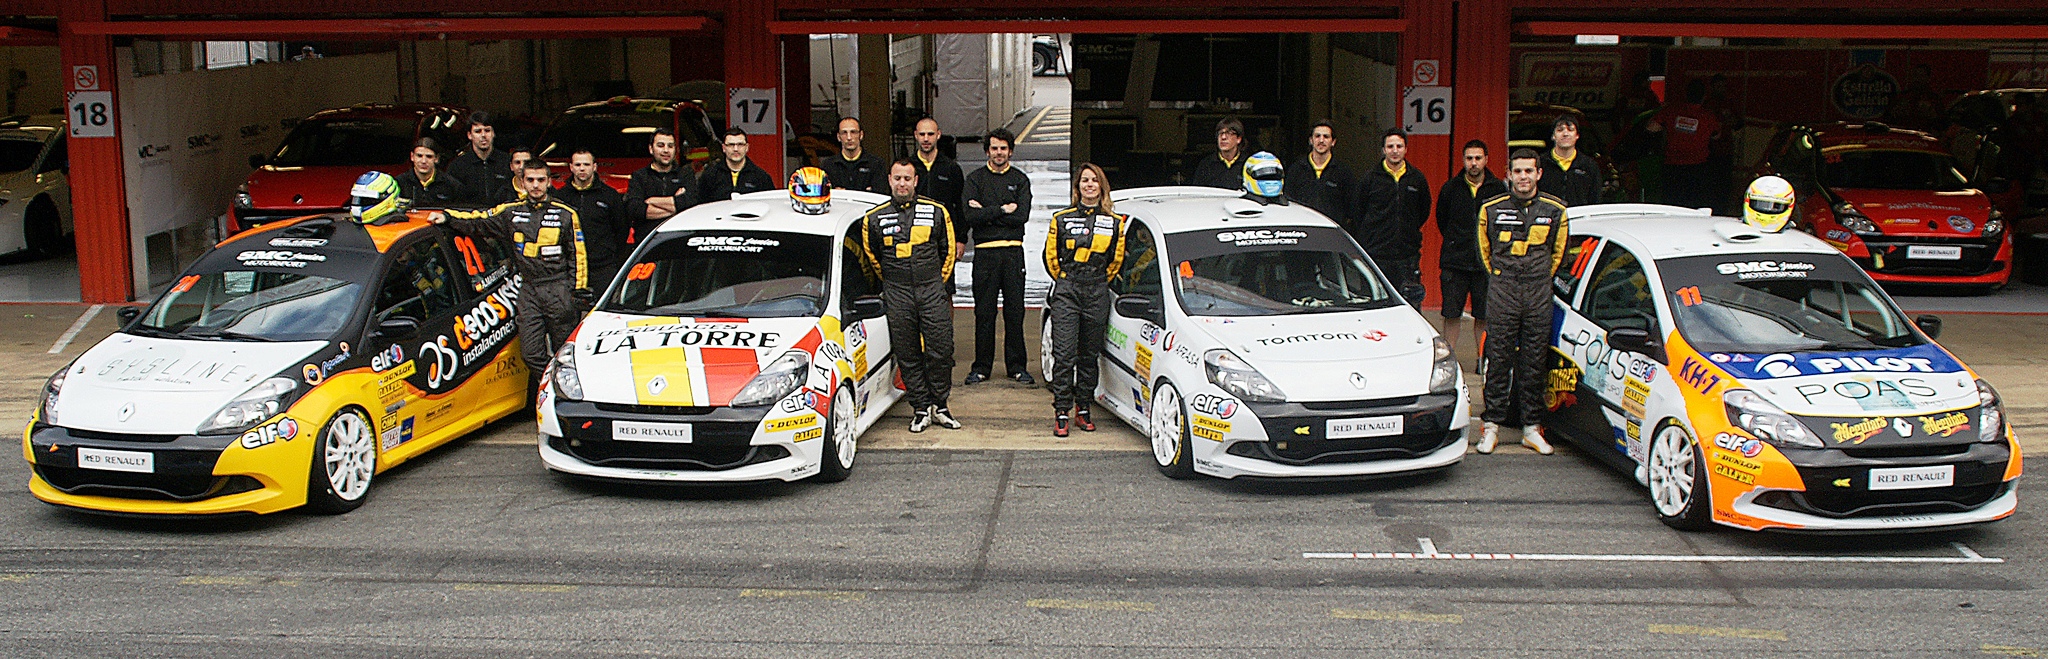 Equipo Renault Clio Cup SMC Junior Motorsport 2013_ baja